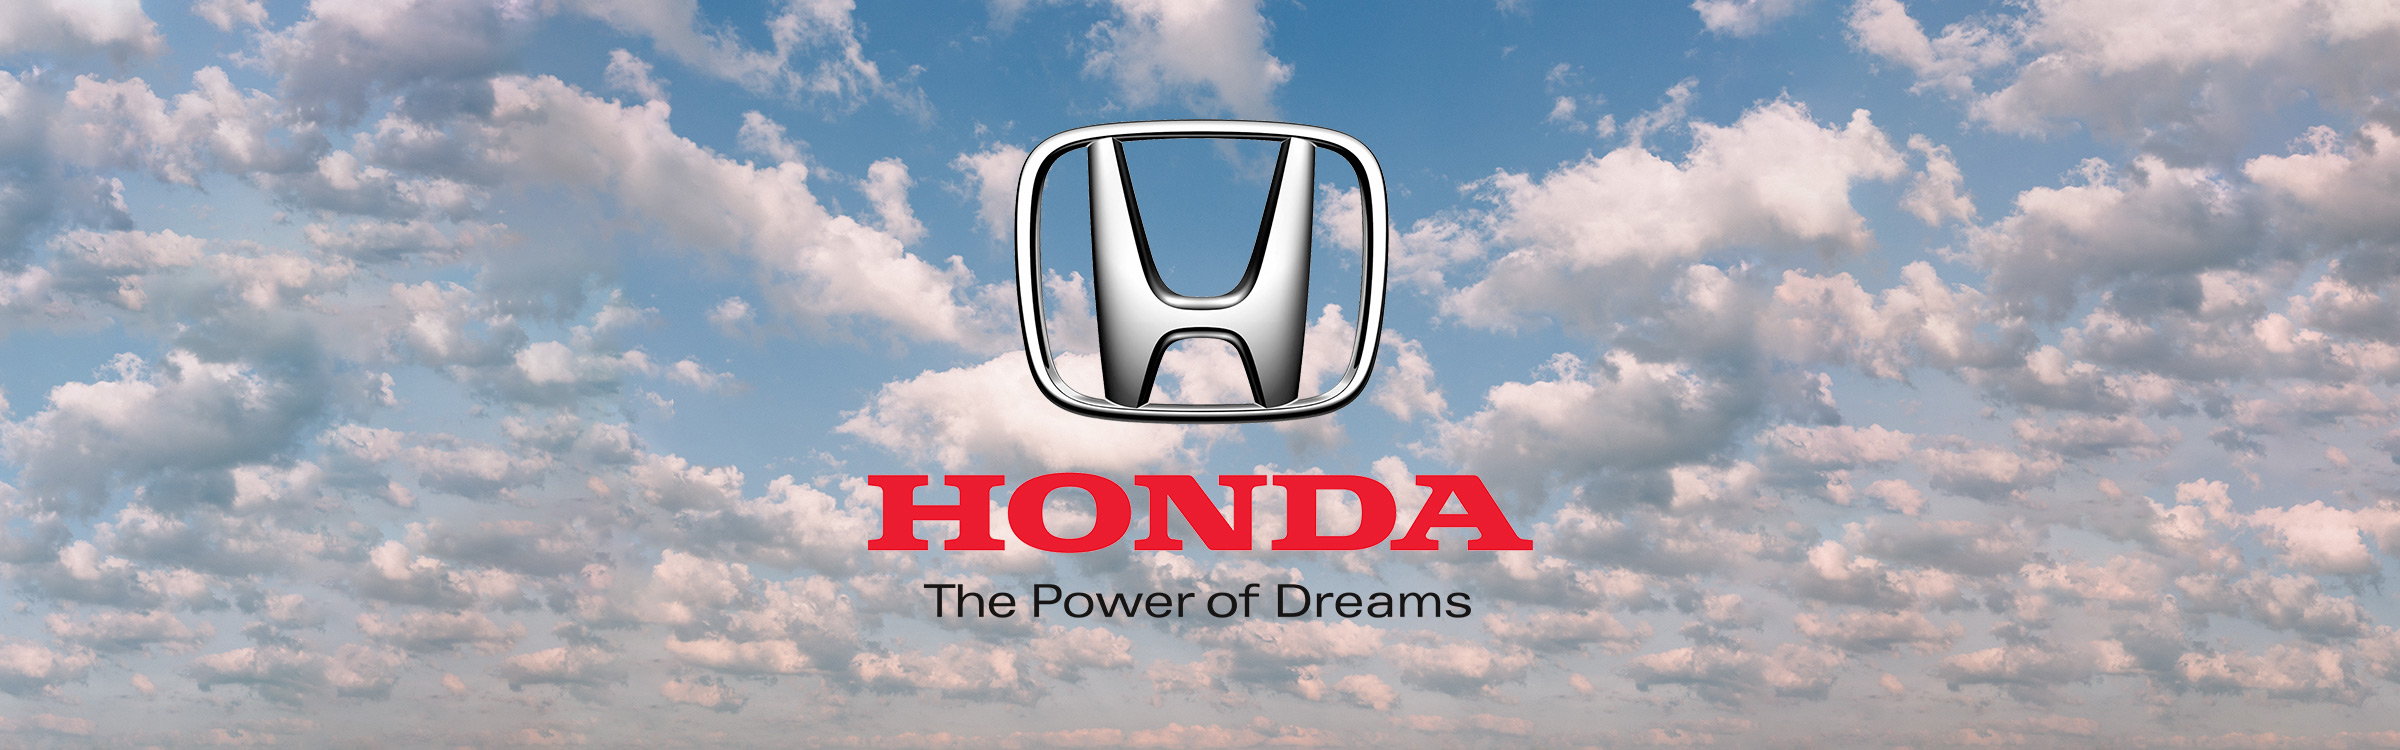 Honda Power of Dreams brand image